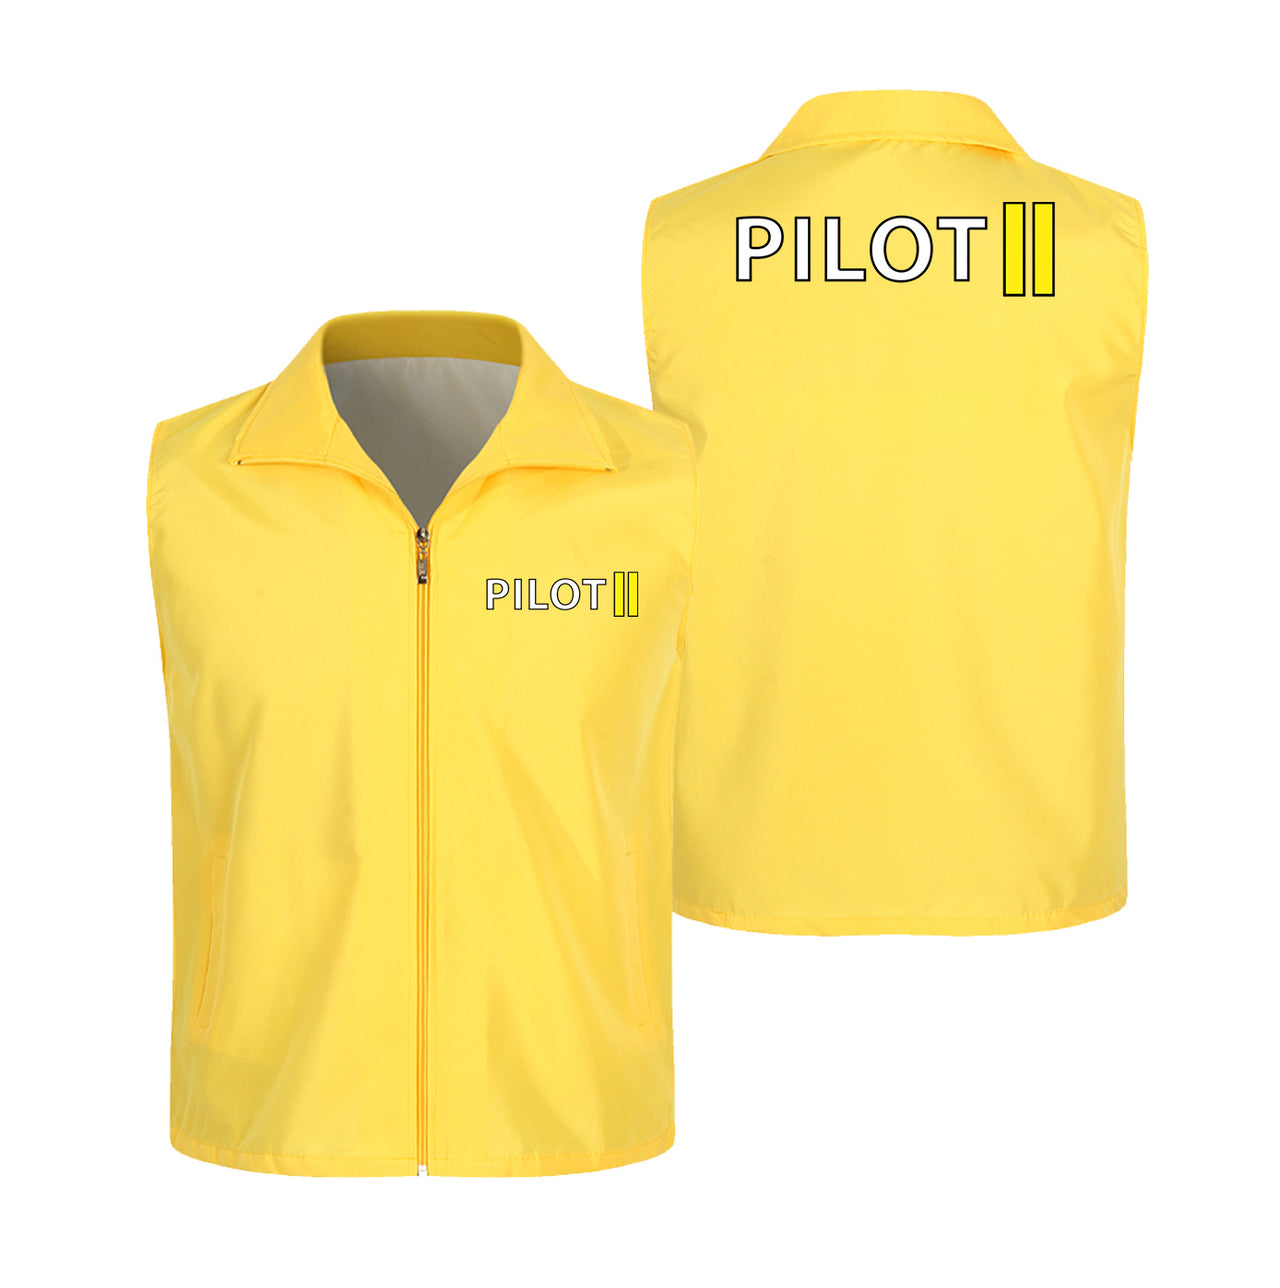 Pilot & Stripes (2 Lines) Designed Thin Style Vests